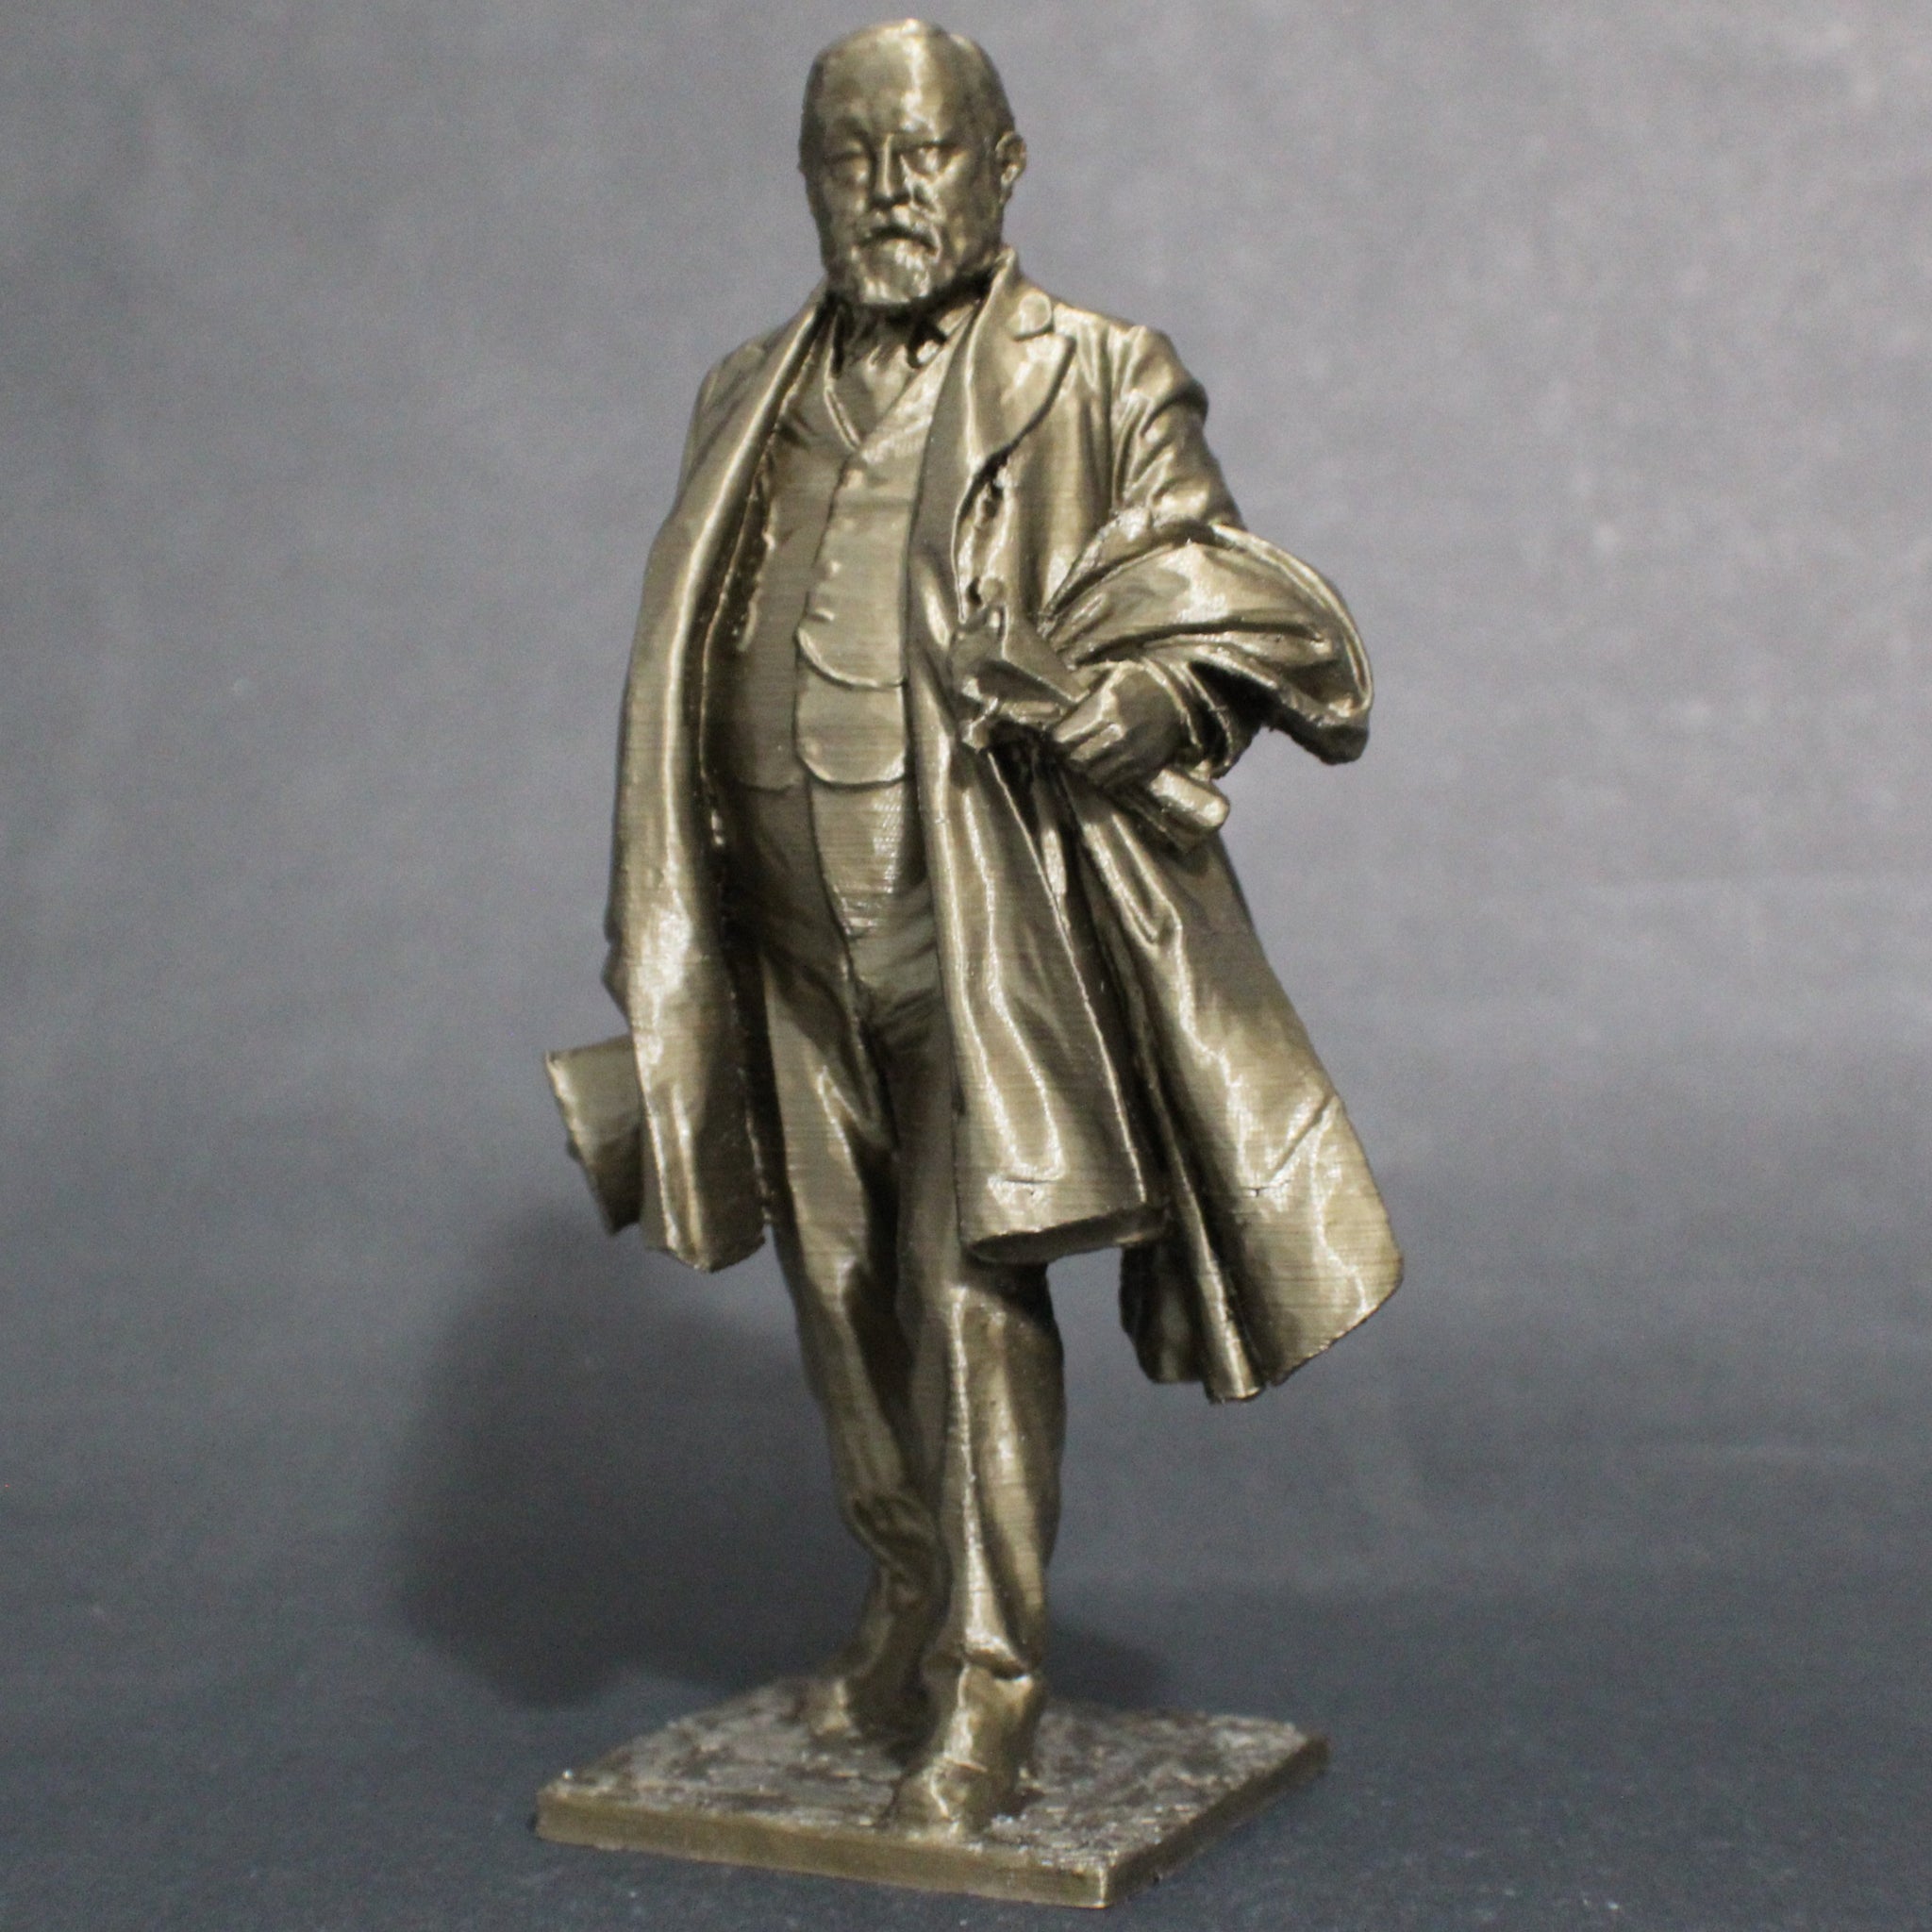 Benjamin Harrison Plaster Statue Replica from University Park, Indianapolis, Indiana